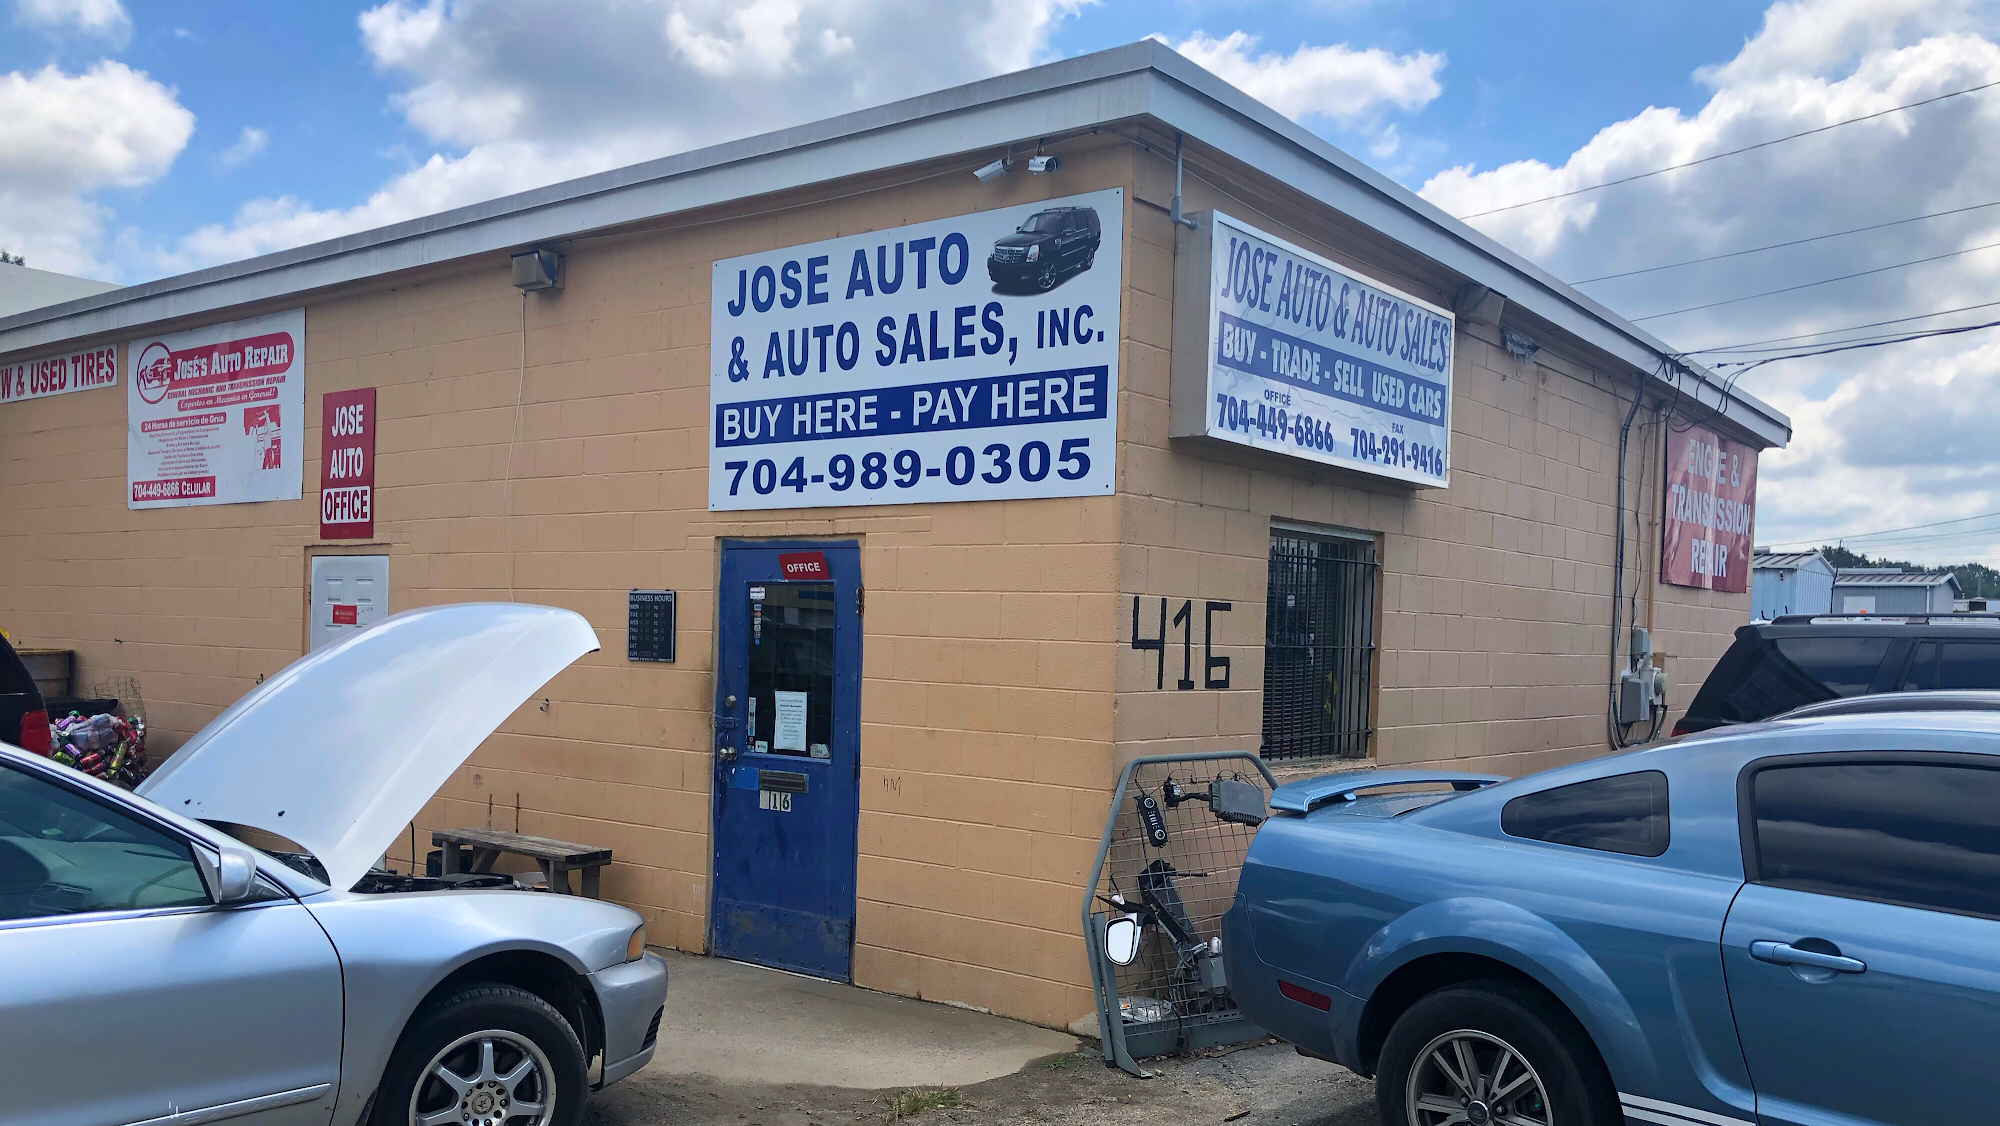 Jose Auto and Auto Sales Inc.